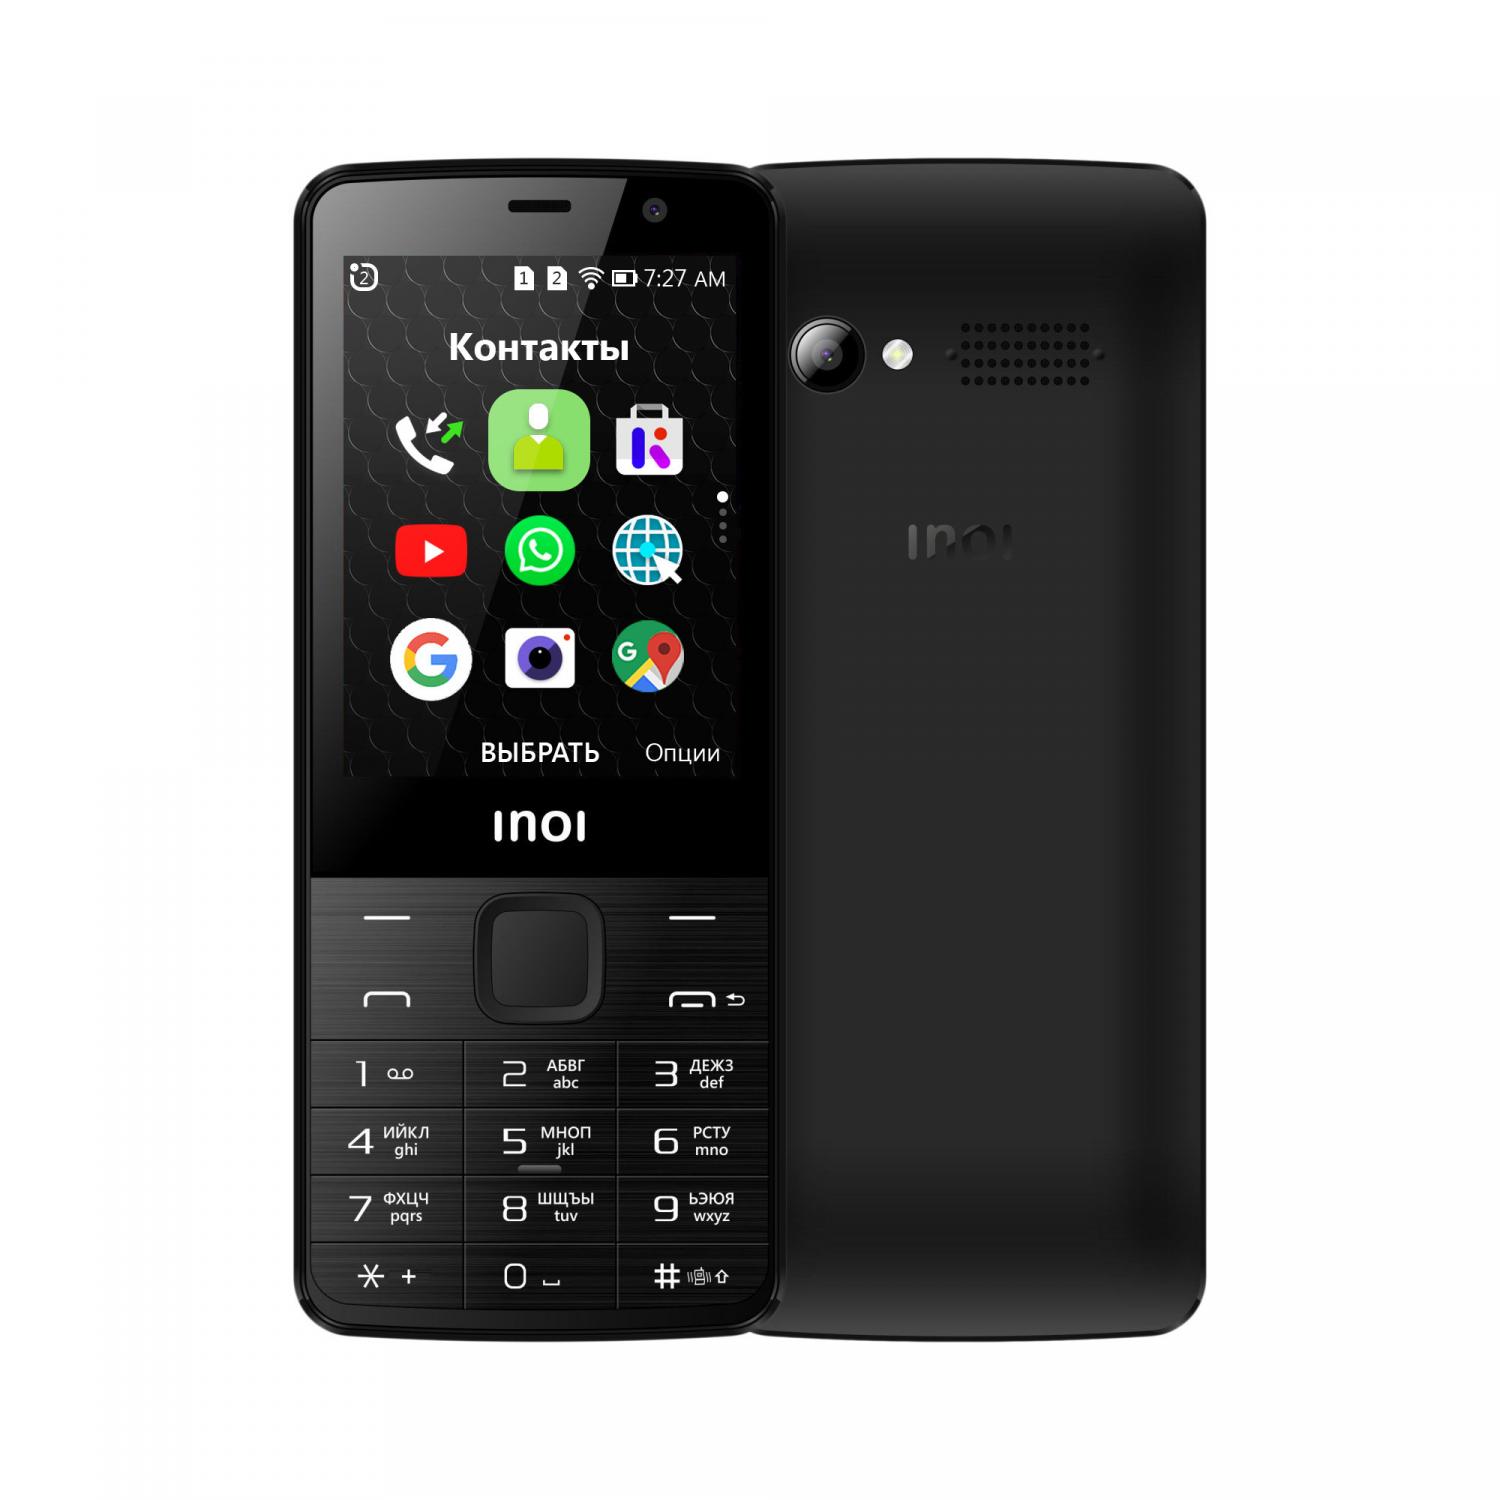 Сотовый телефон INOI 283K (2*SIM, 2,8", 512/4GB,320х240, 2000 мАч,2+0,3Мп, FM, BT,Wi-Fi, KaiOS)Black